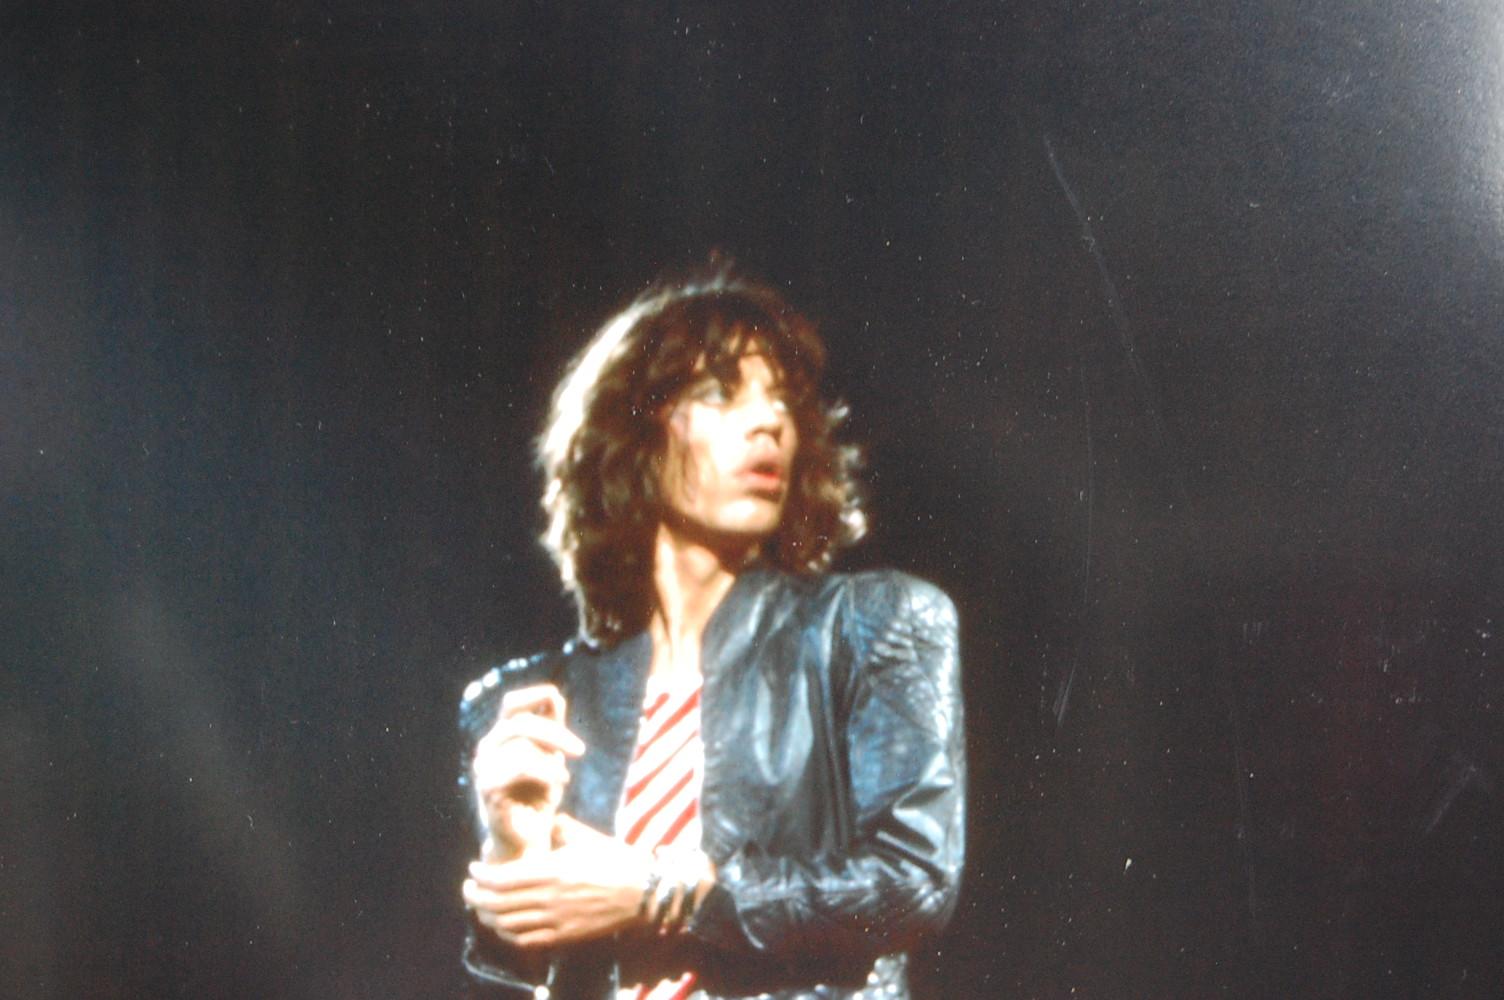 English Mick Jagger Photograph 